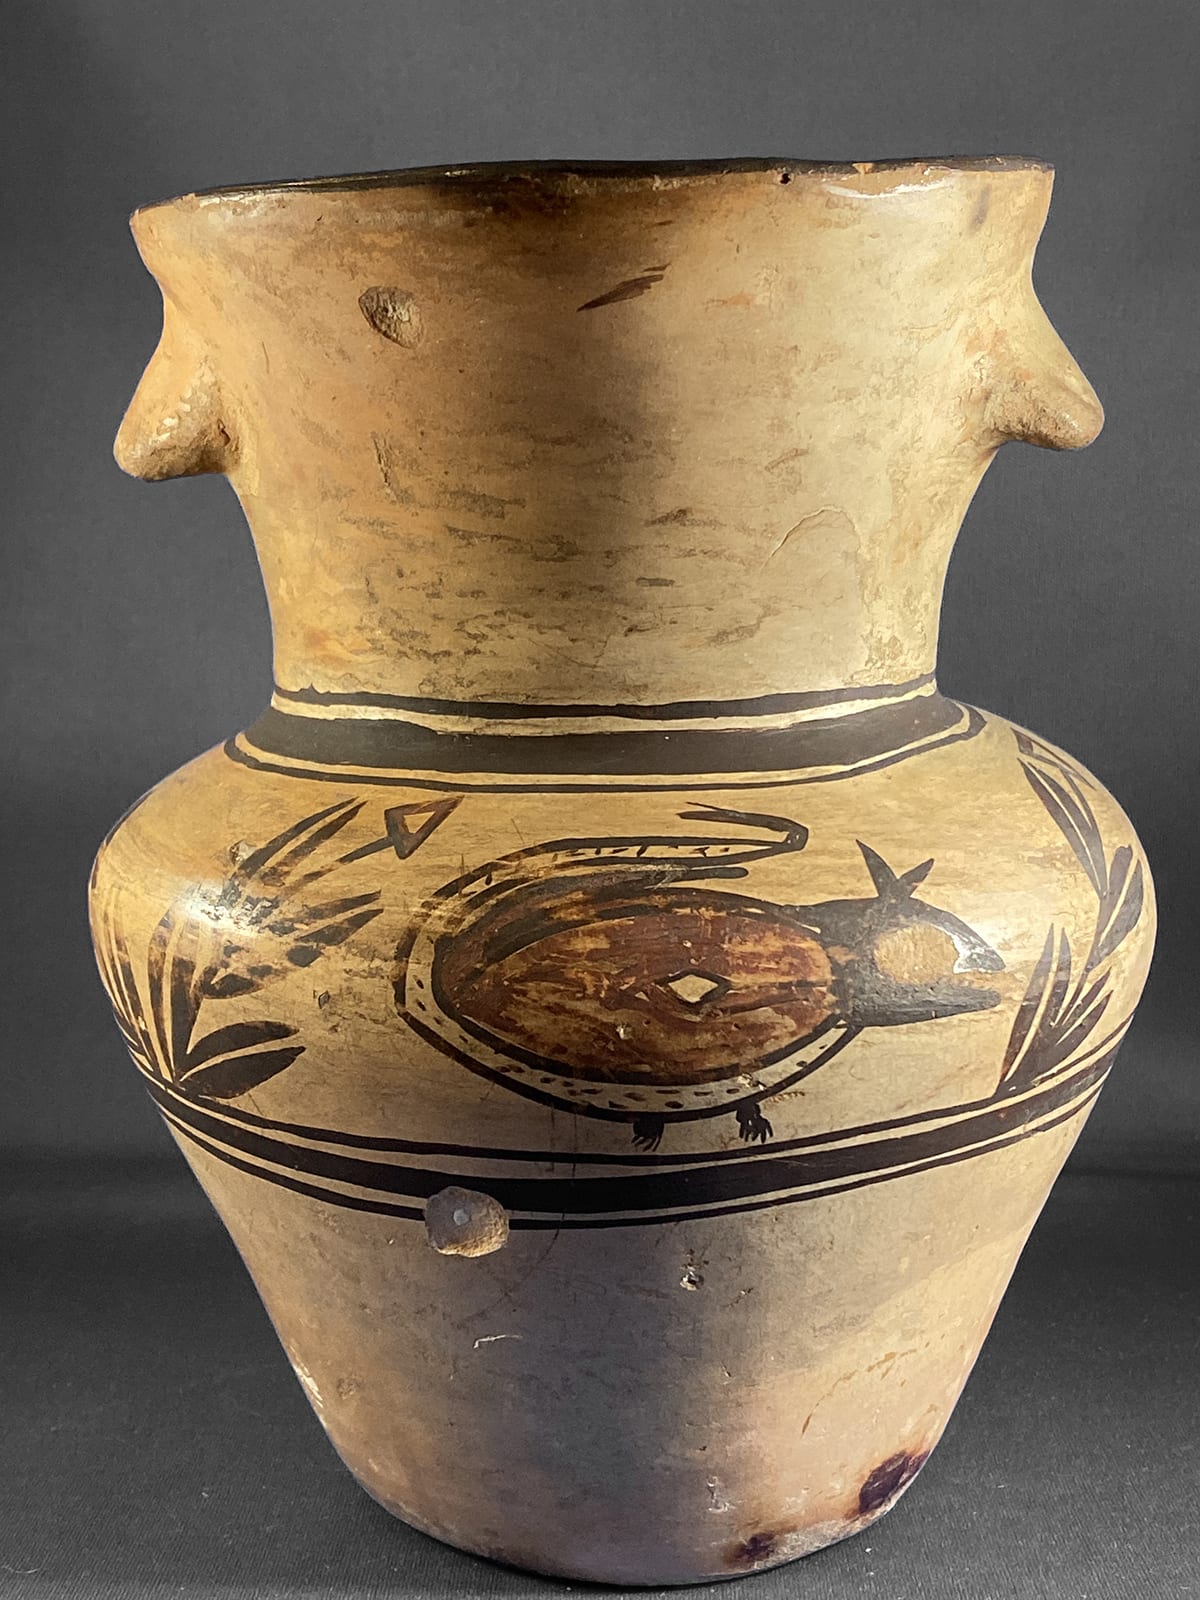 2019-19 Talavera vase with creatures